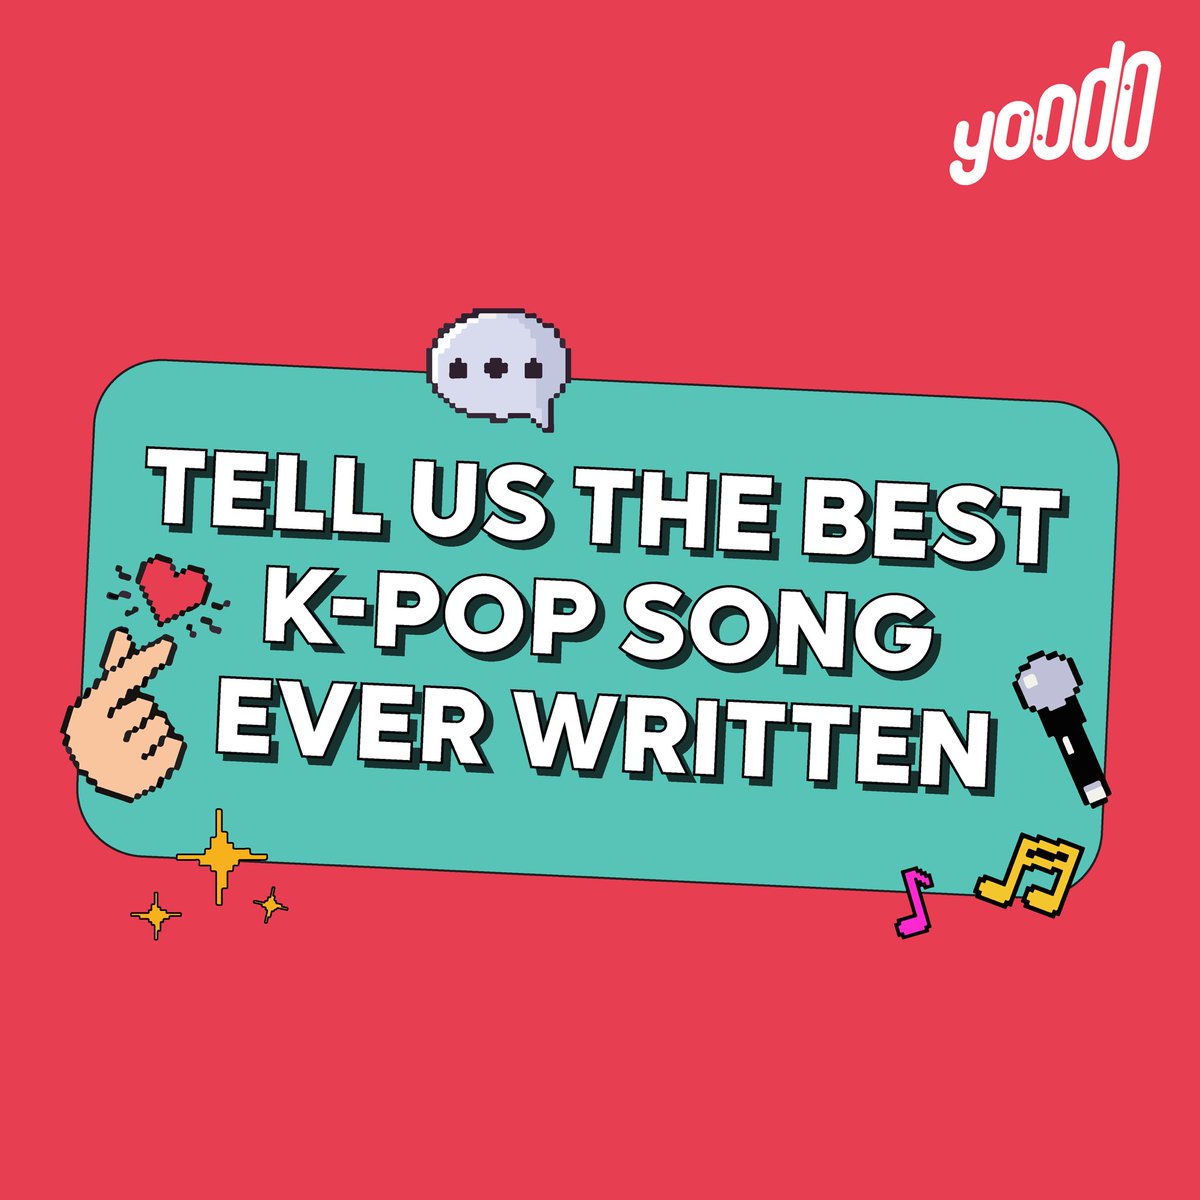 THE BEST KPOP SONG EVER WRITTEN? 1, 2, G0!

#yoodo #yoodoyou #saranghaeyoodo